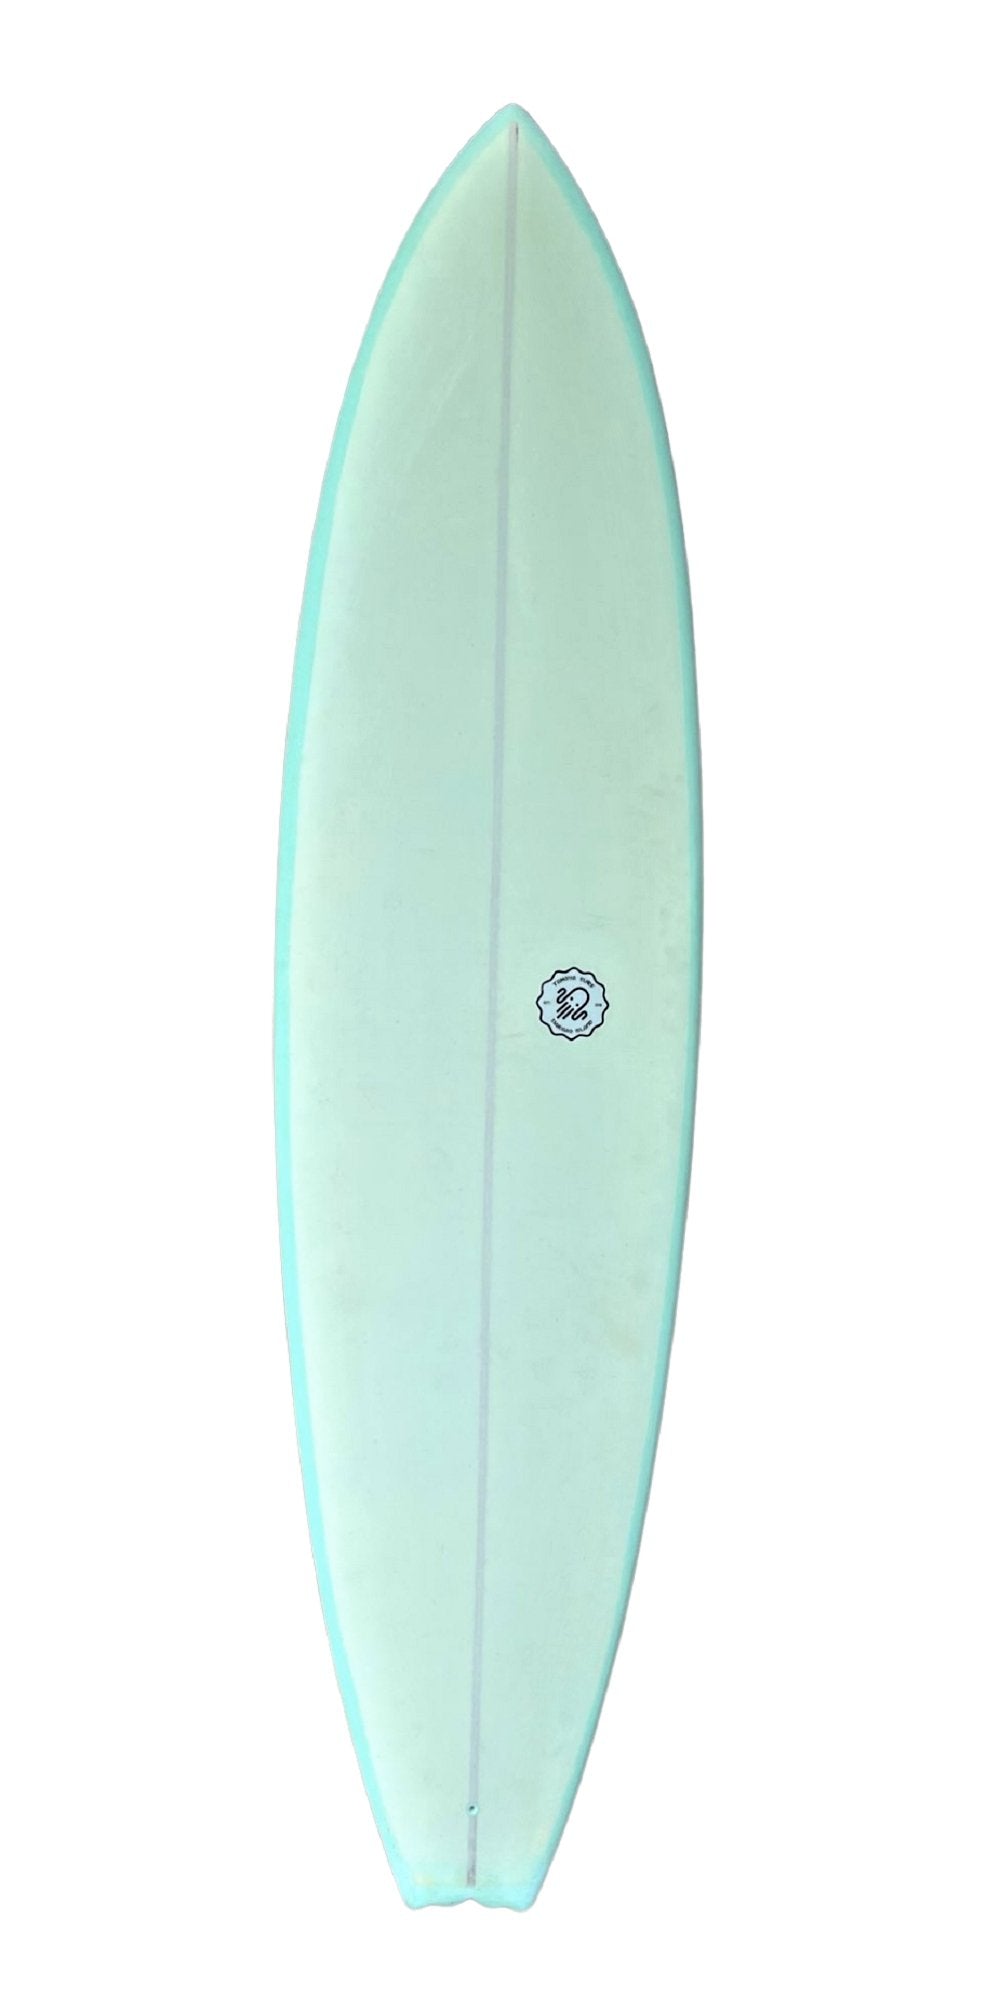 Tamaya Heluhelu 6'4 Shortboard (Ocean) - KS Boardriders Surf Shop